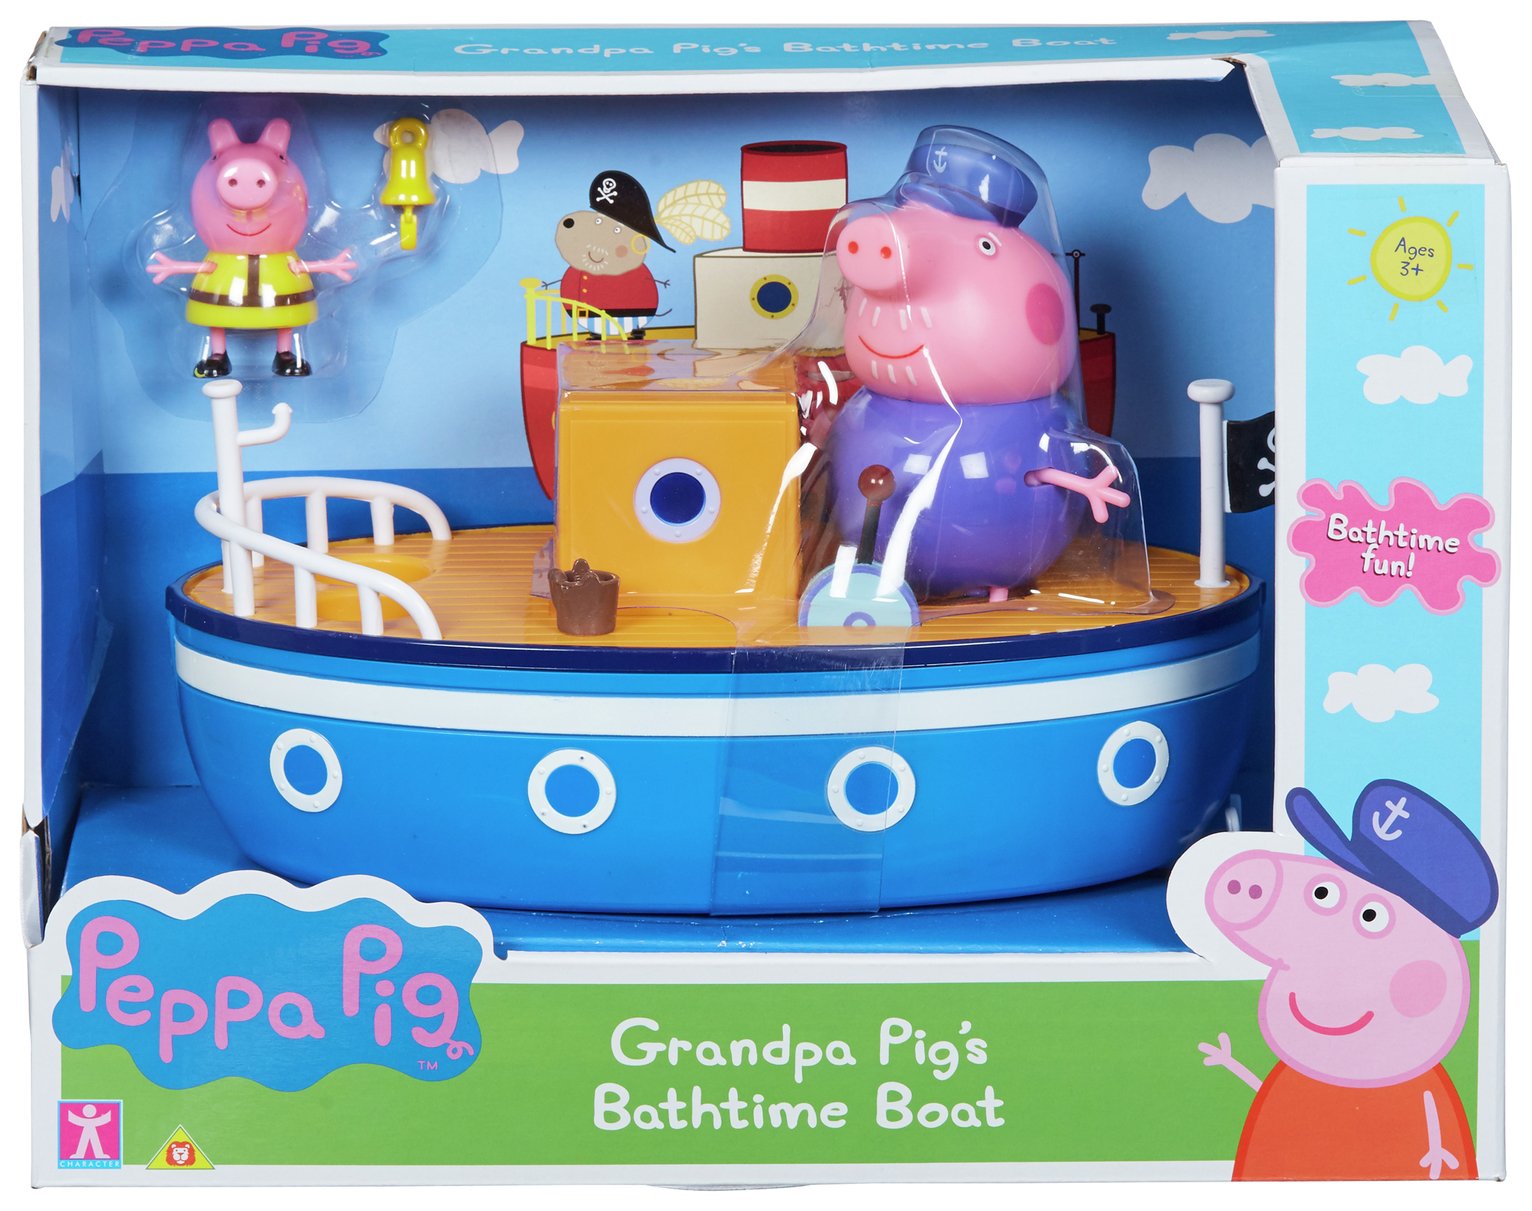 Peppa Pig Grandpa Pig's Bathtime Boat Review